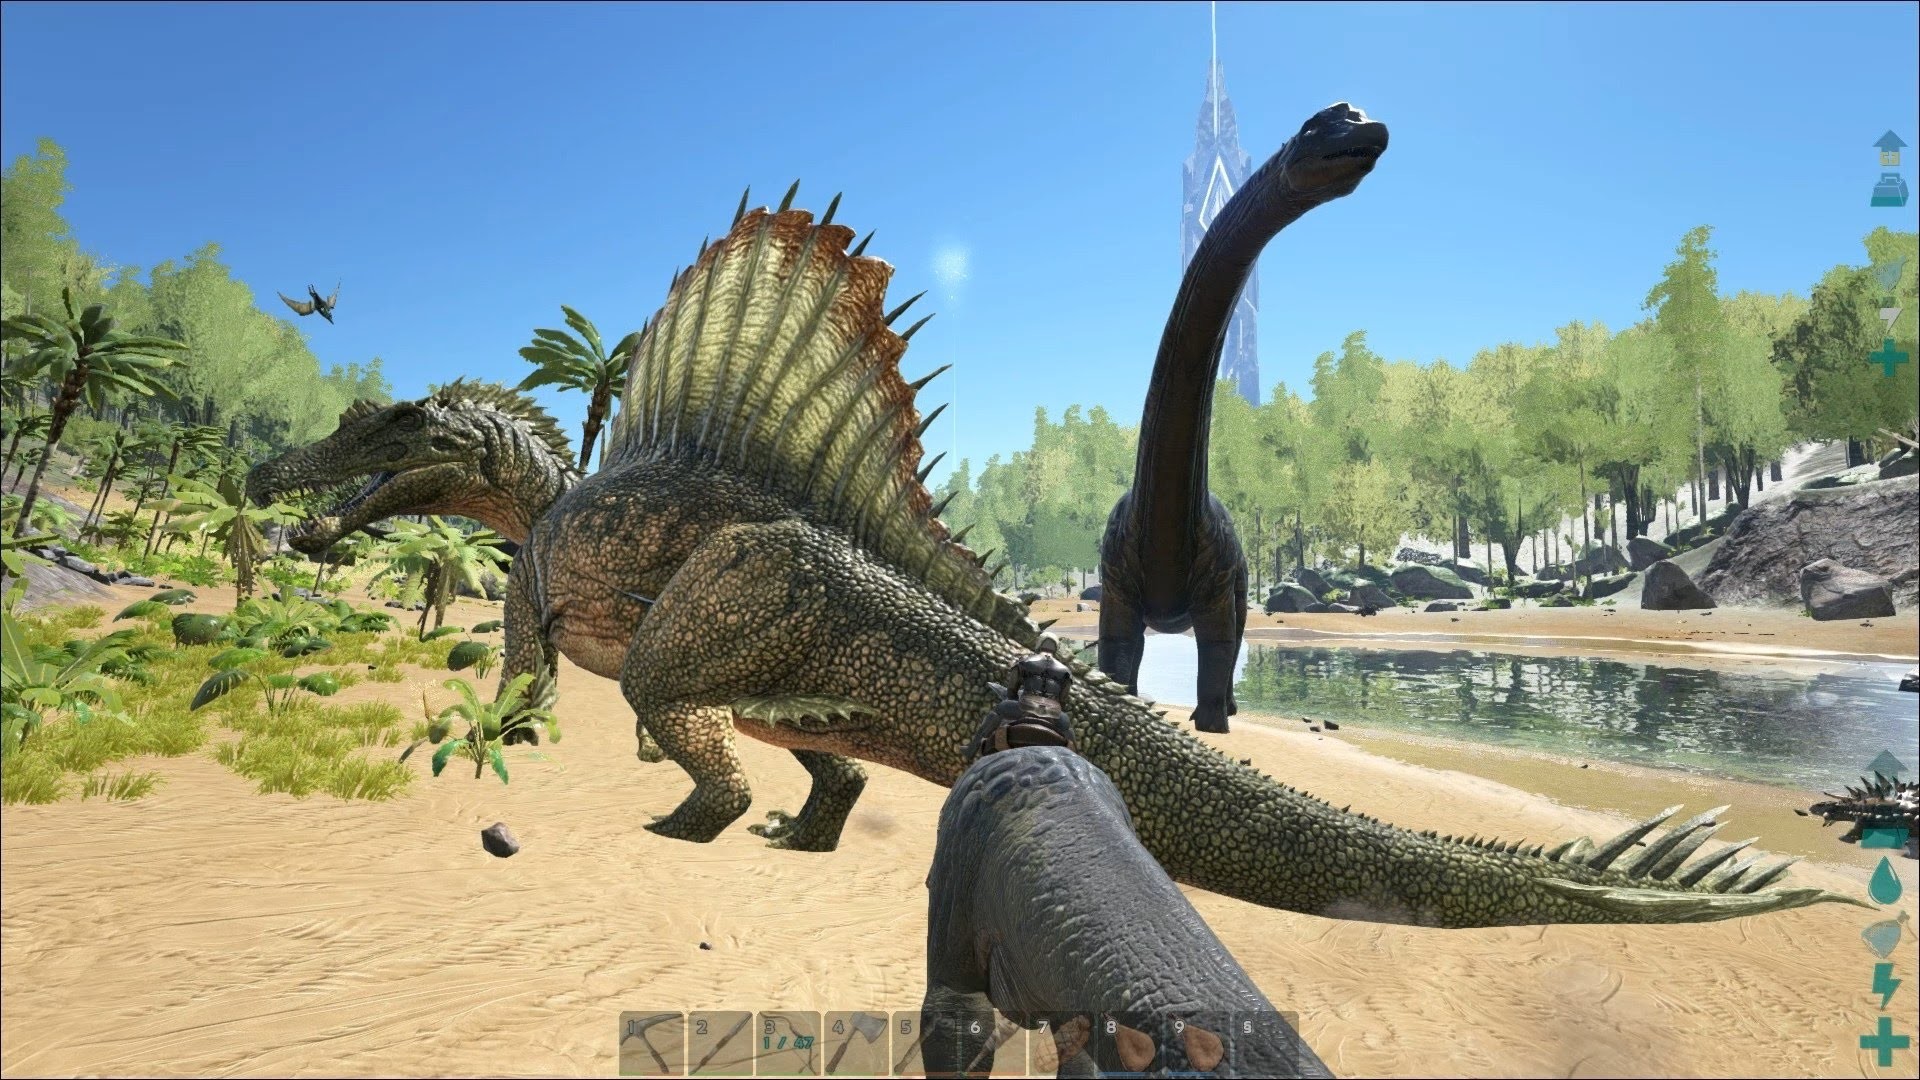 1920x1080 ARK: Survival Evolved - My 49 lvl Carnotaurus vs Spinosaurus 21 lvl! -  YouTube